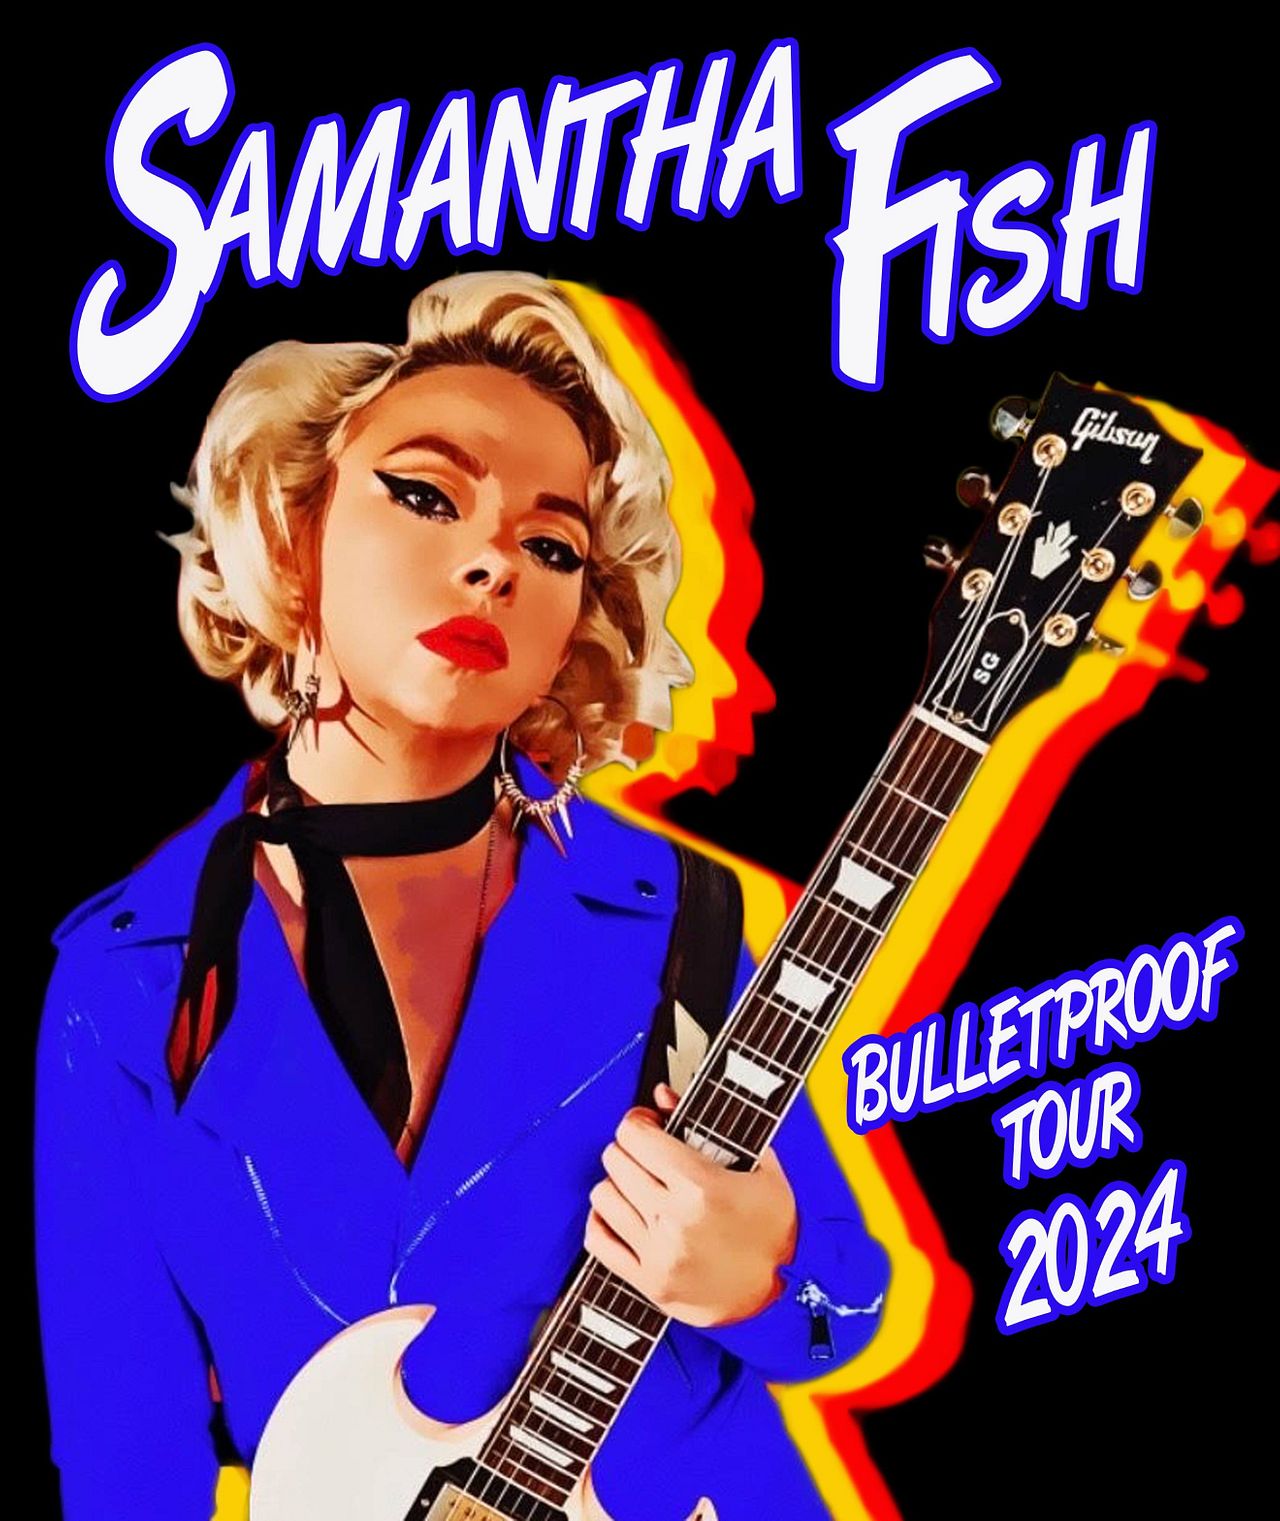 Samantha Fish - Bulletproof Tour 2024 tickets by Asbury Arts Center